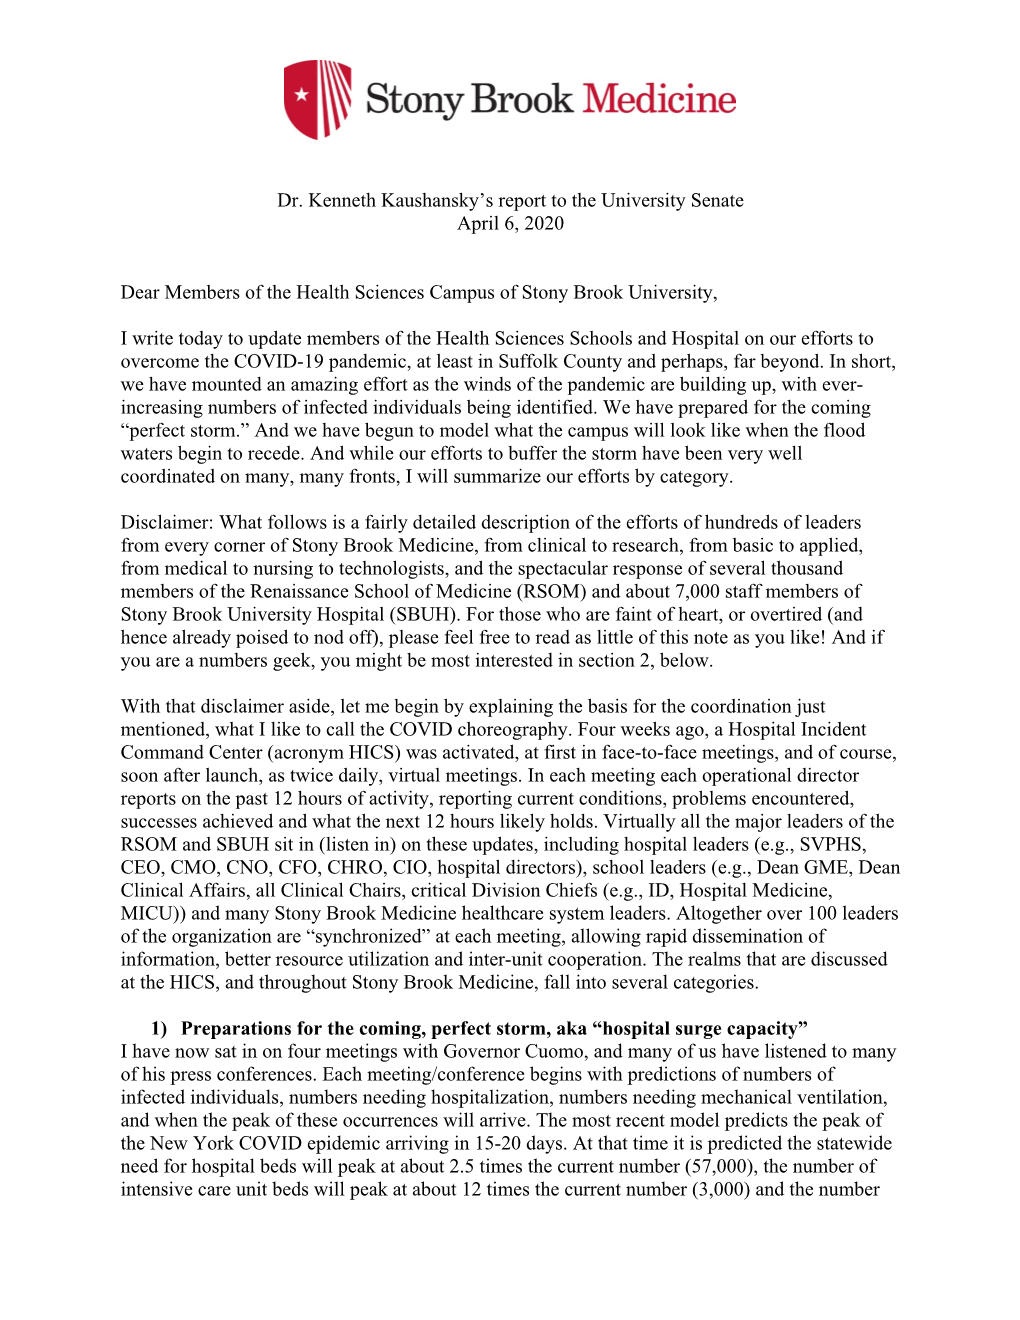 Dr. Kenneth Kaushansky's Report to the University Senate April 6, 2020